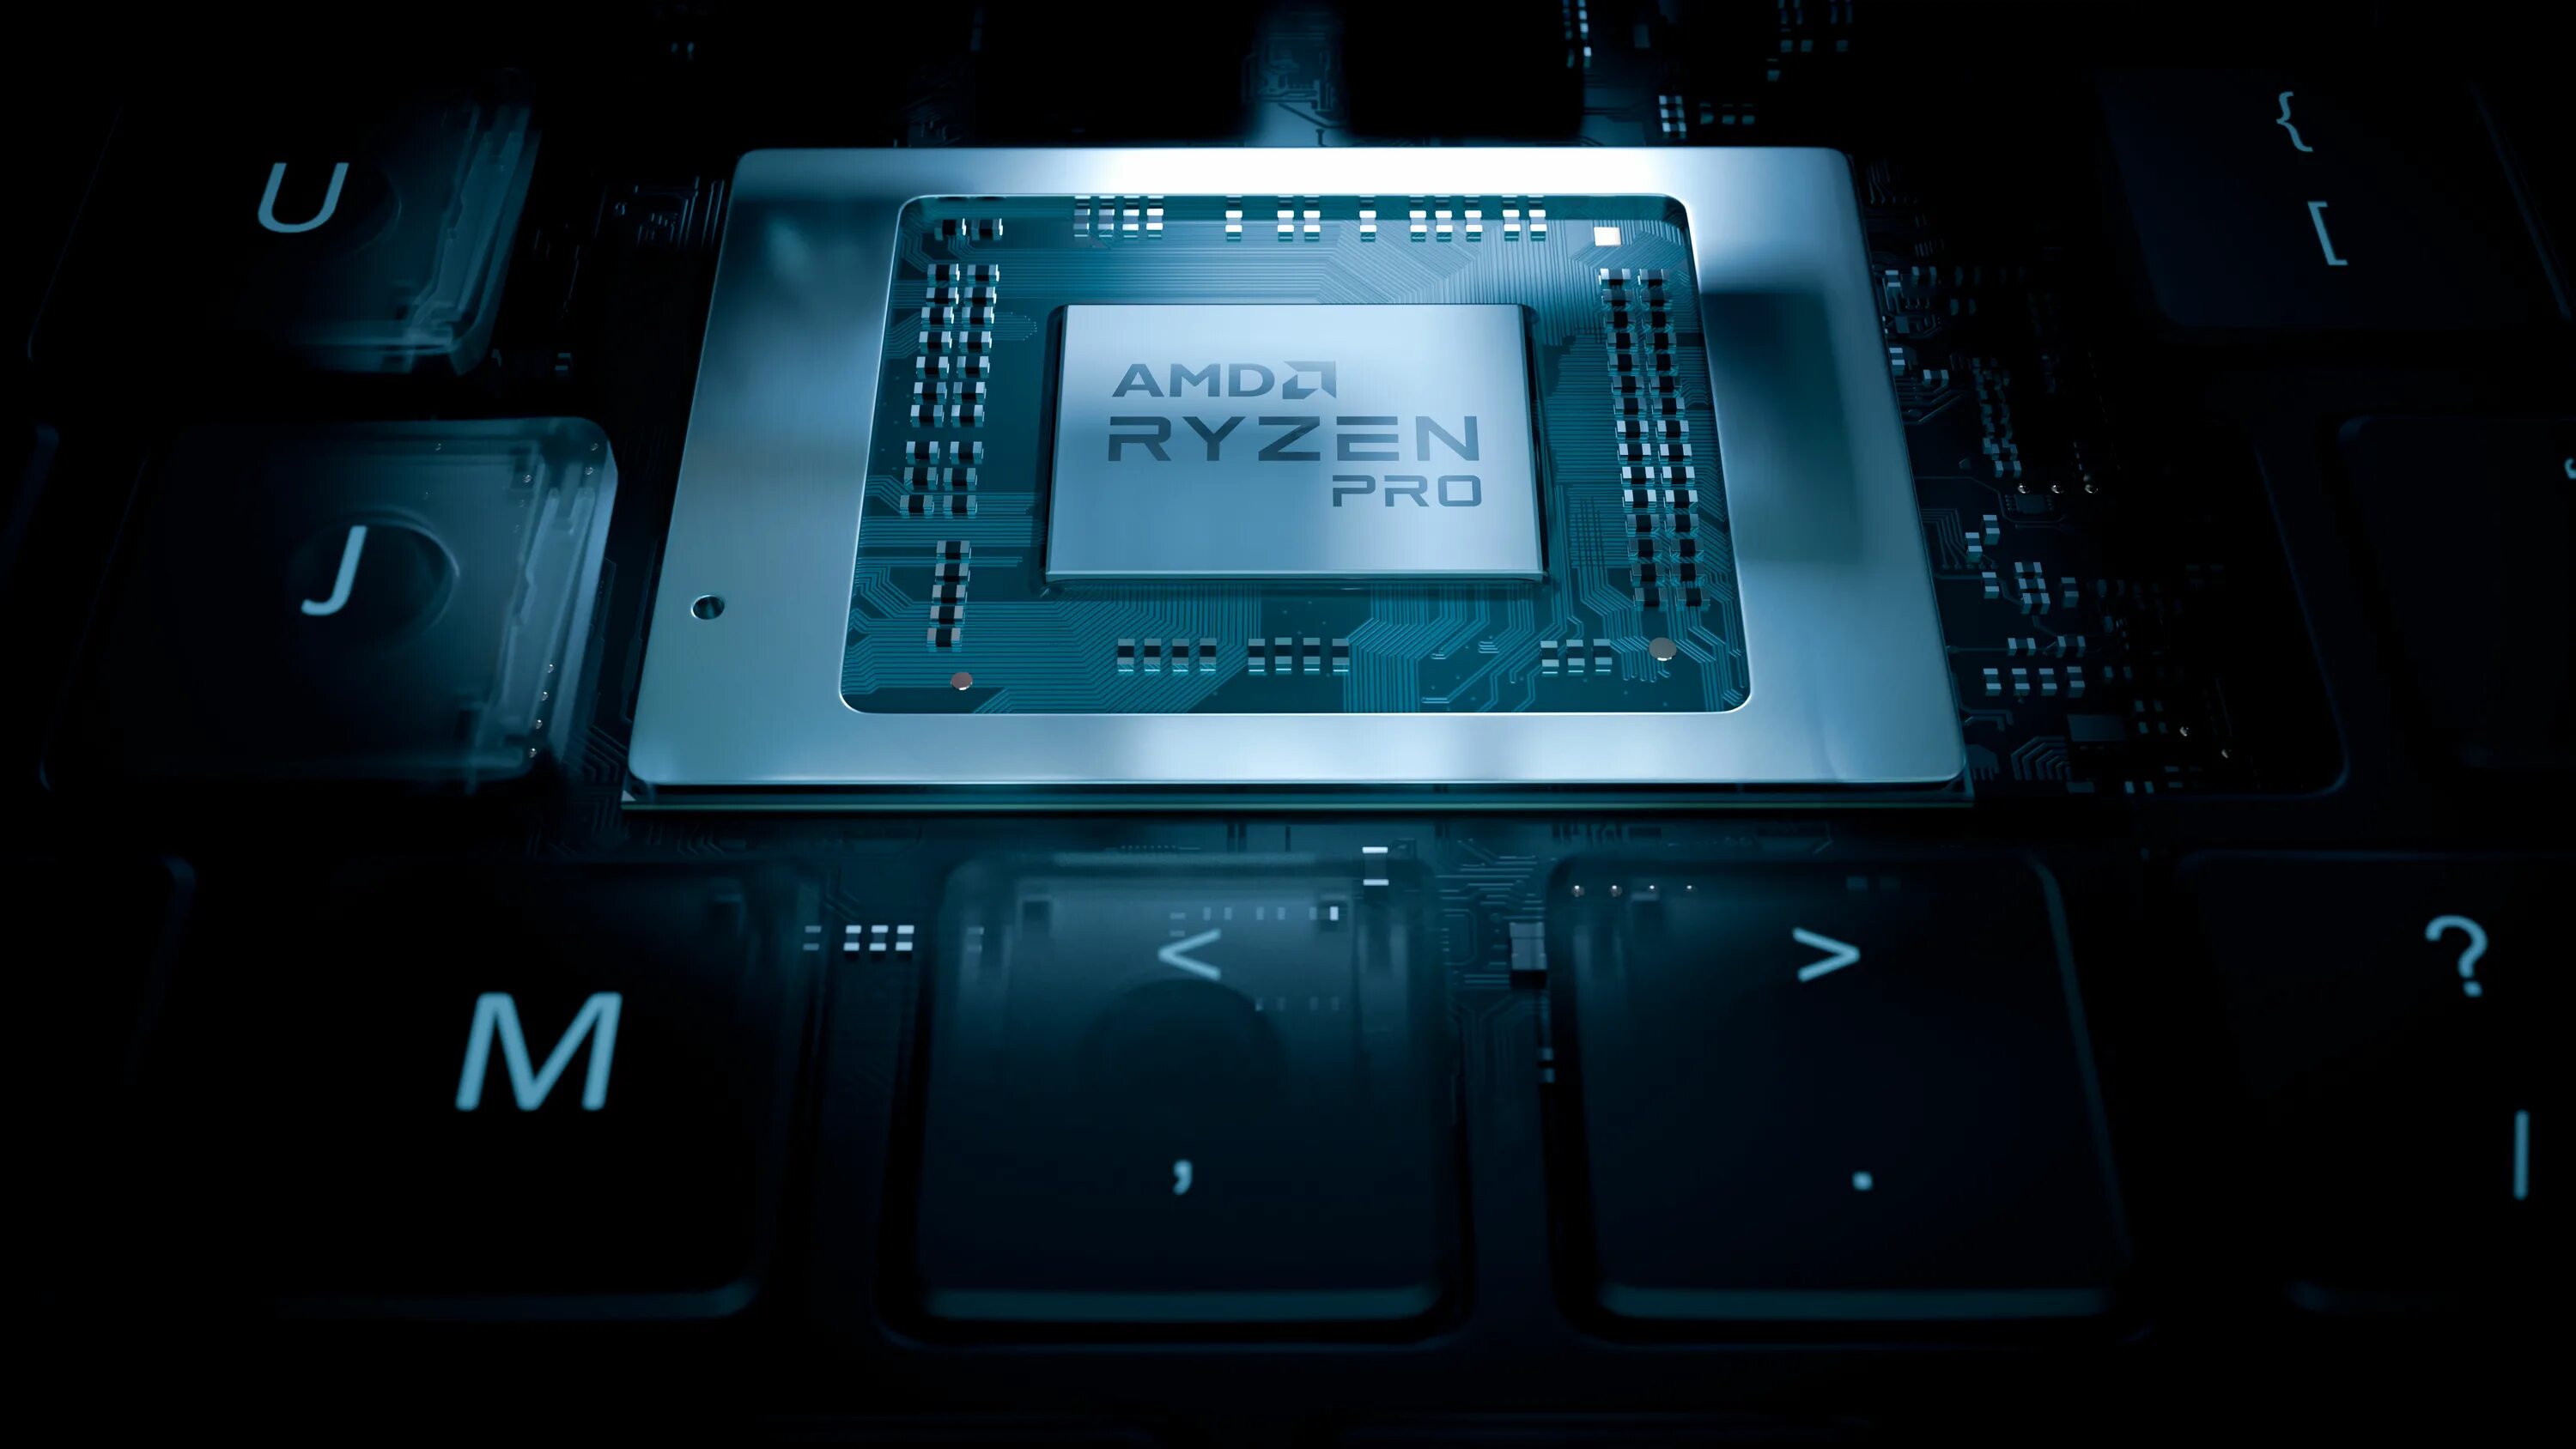 Ryzen 5 4000. Процессоров AMD 2020. Процессор AMD Ryzen 5 4600h. Ryzen Pro 4000 Series mobile Processors. Amd ryzen 5 series